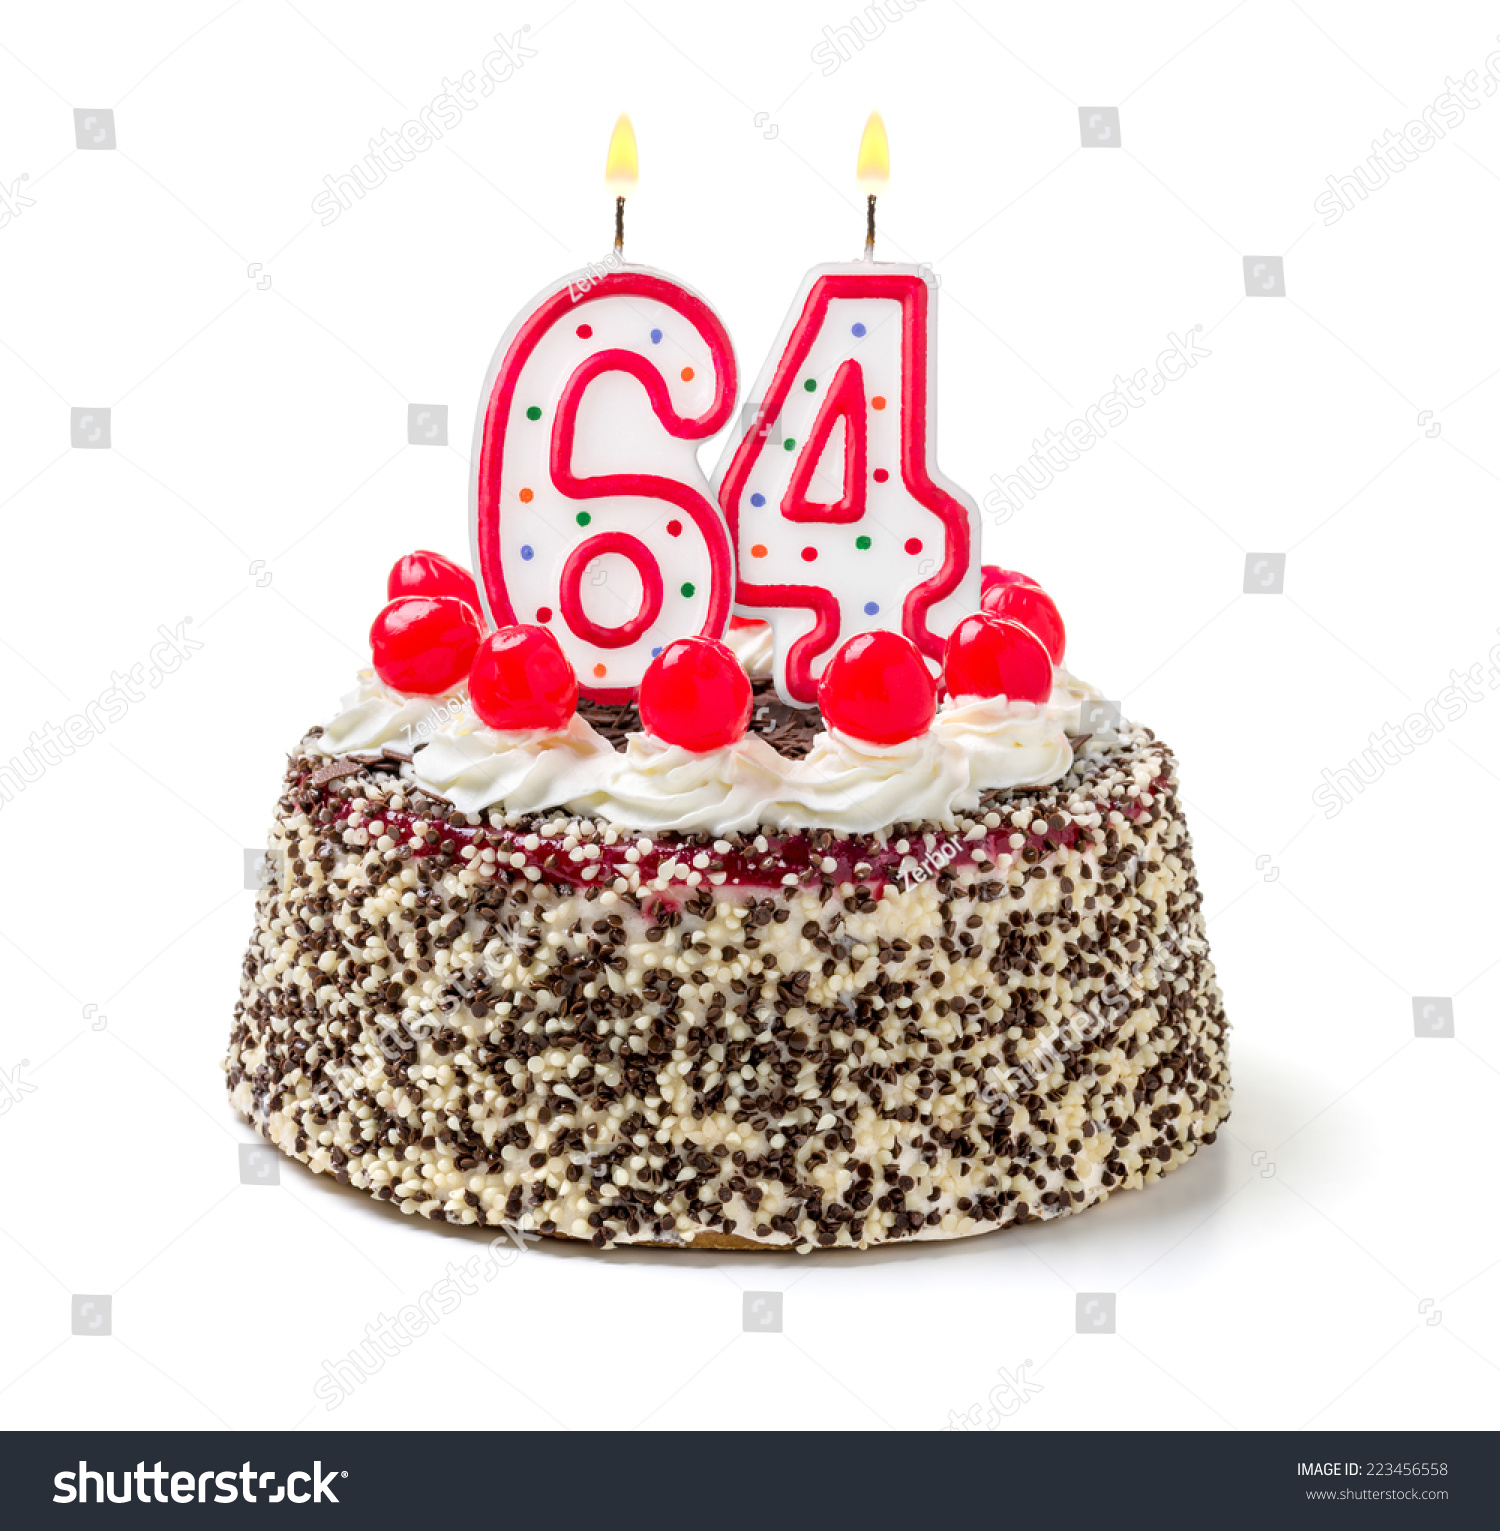 64th Birthday Cake 7683